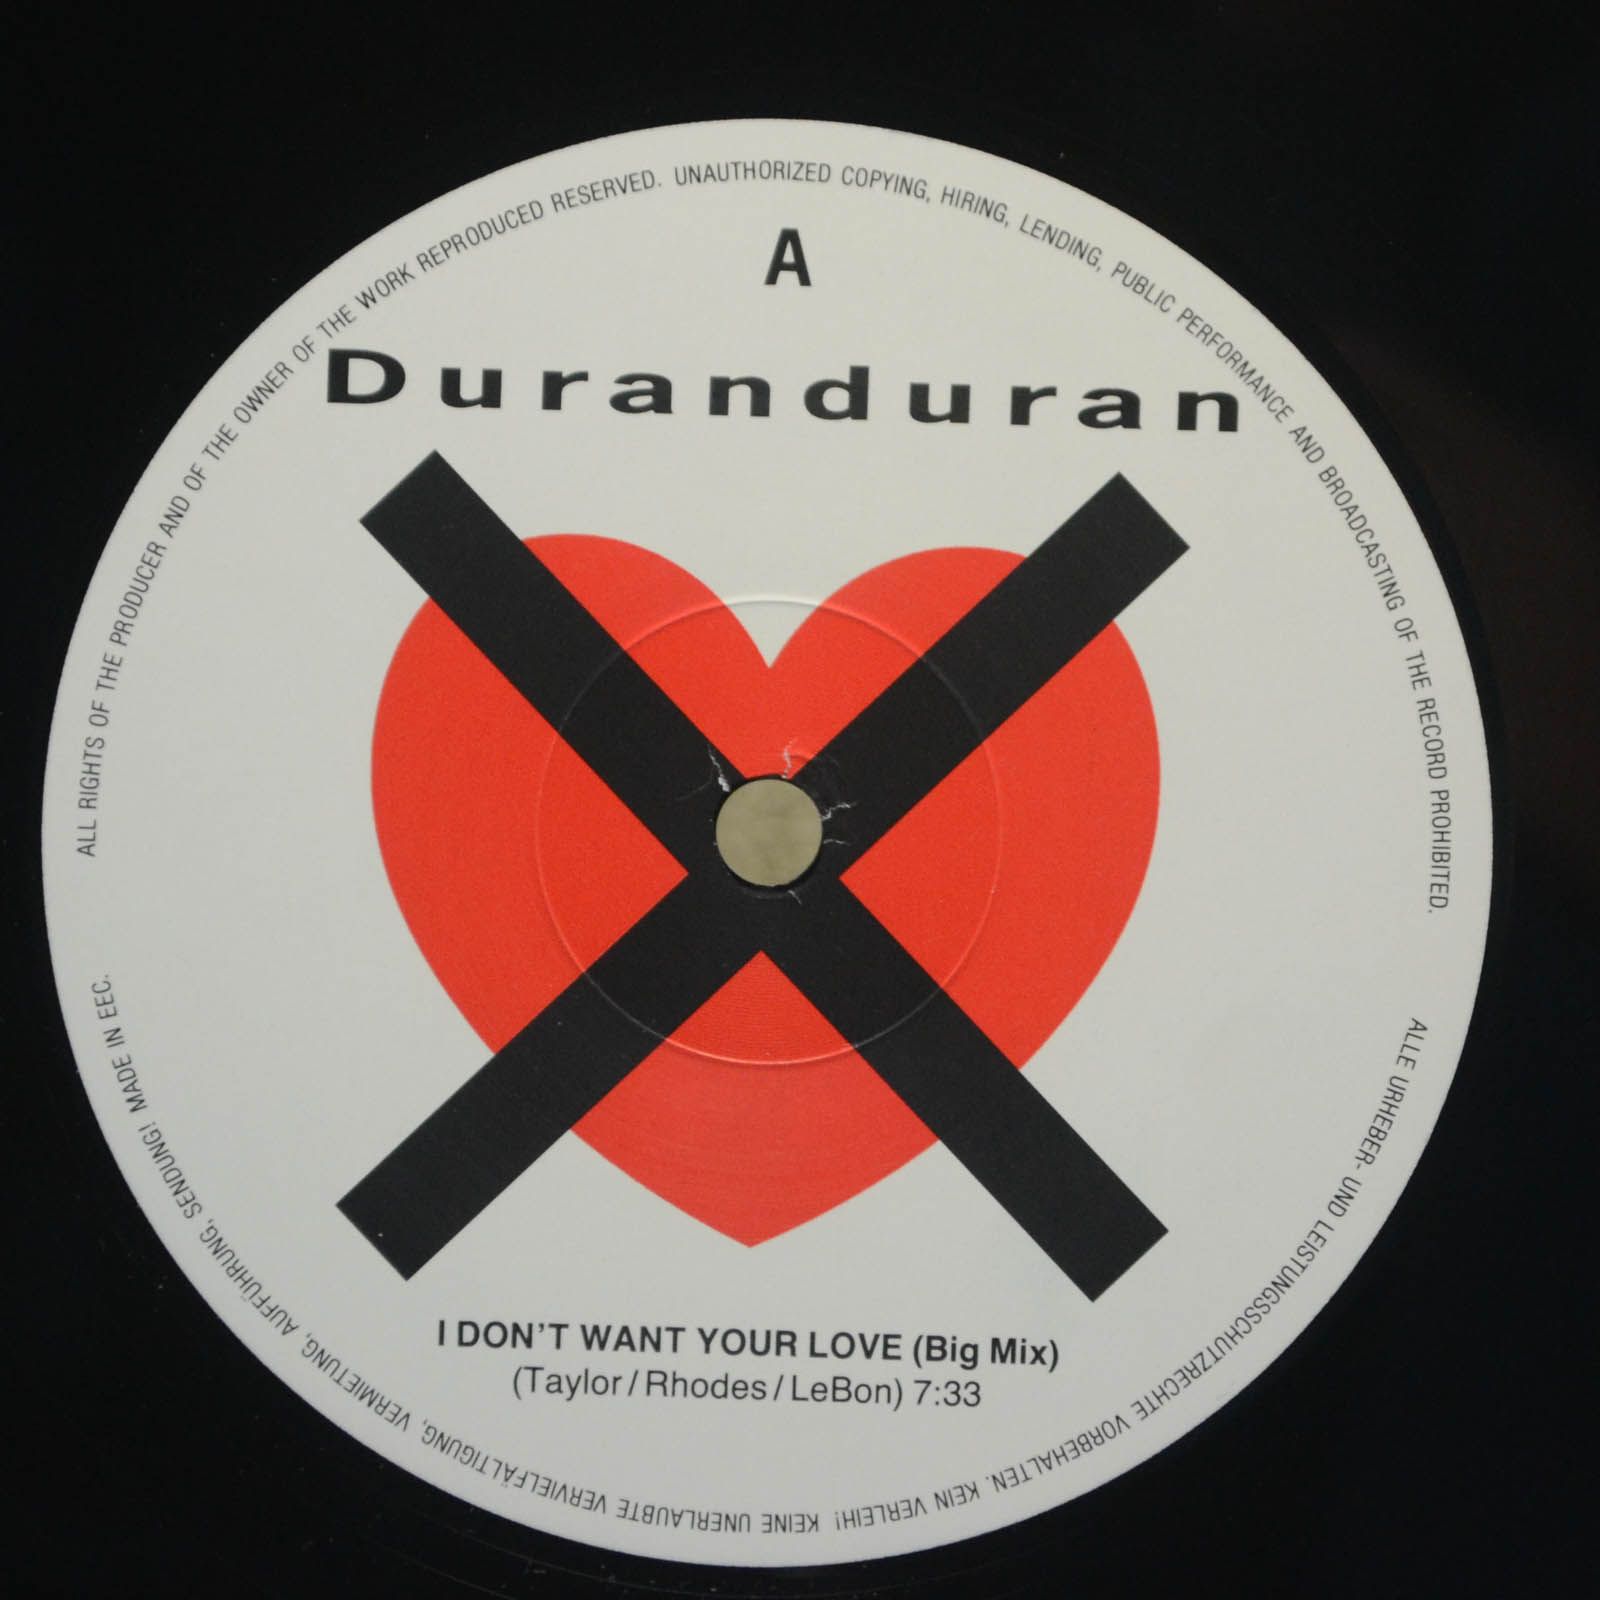 Duranduran — I Don't Want Your Love, 1988